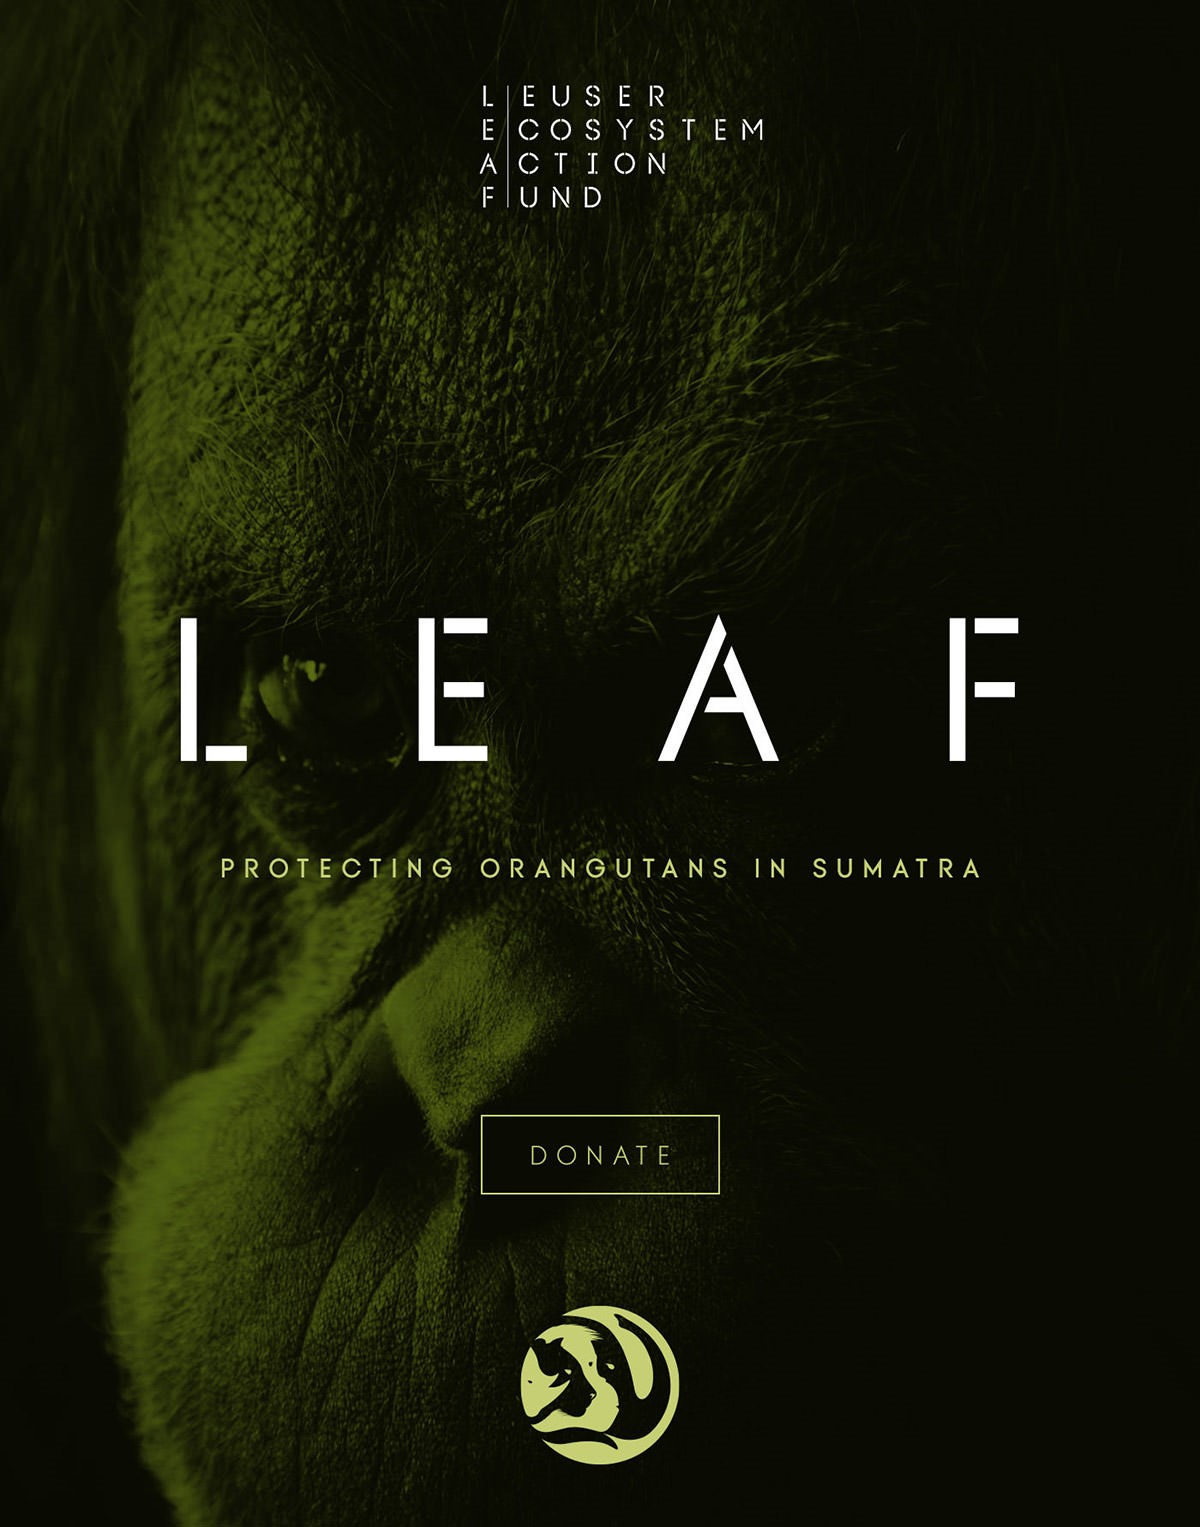 Leuser Ecosystem Action Fund [LEAF] orangutan donation request advert. Client: DiCaprio foundation + Sumatran Orangutan Society [SOS].